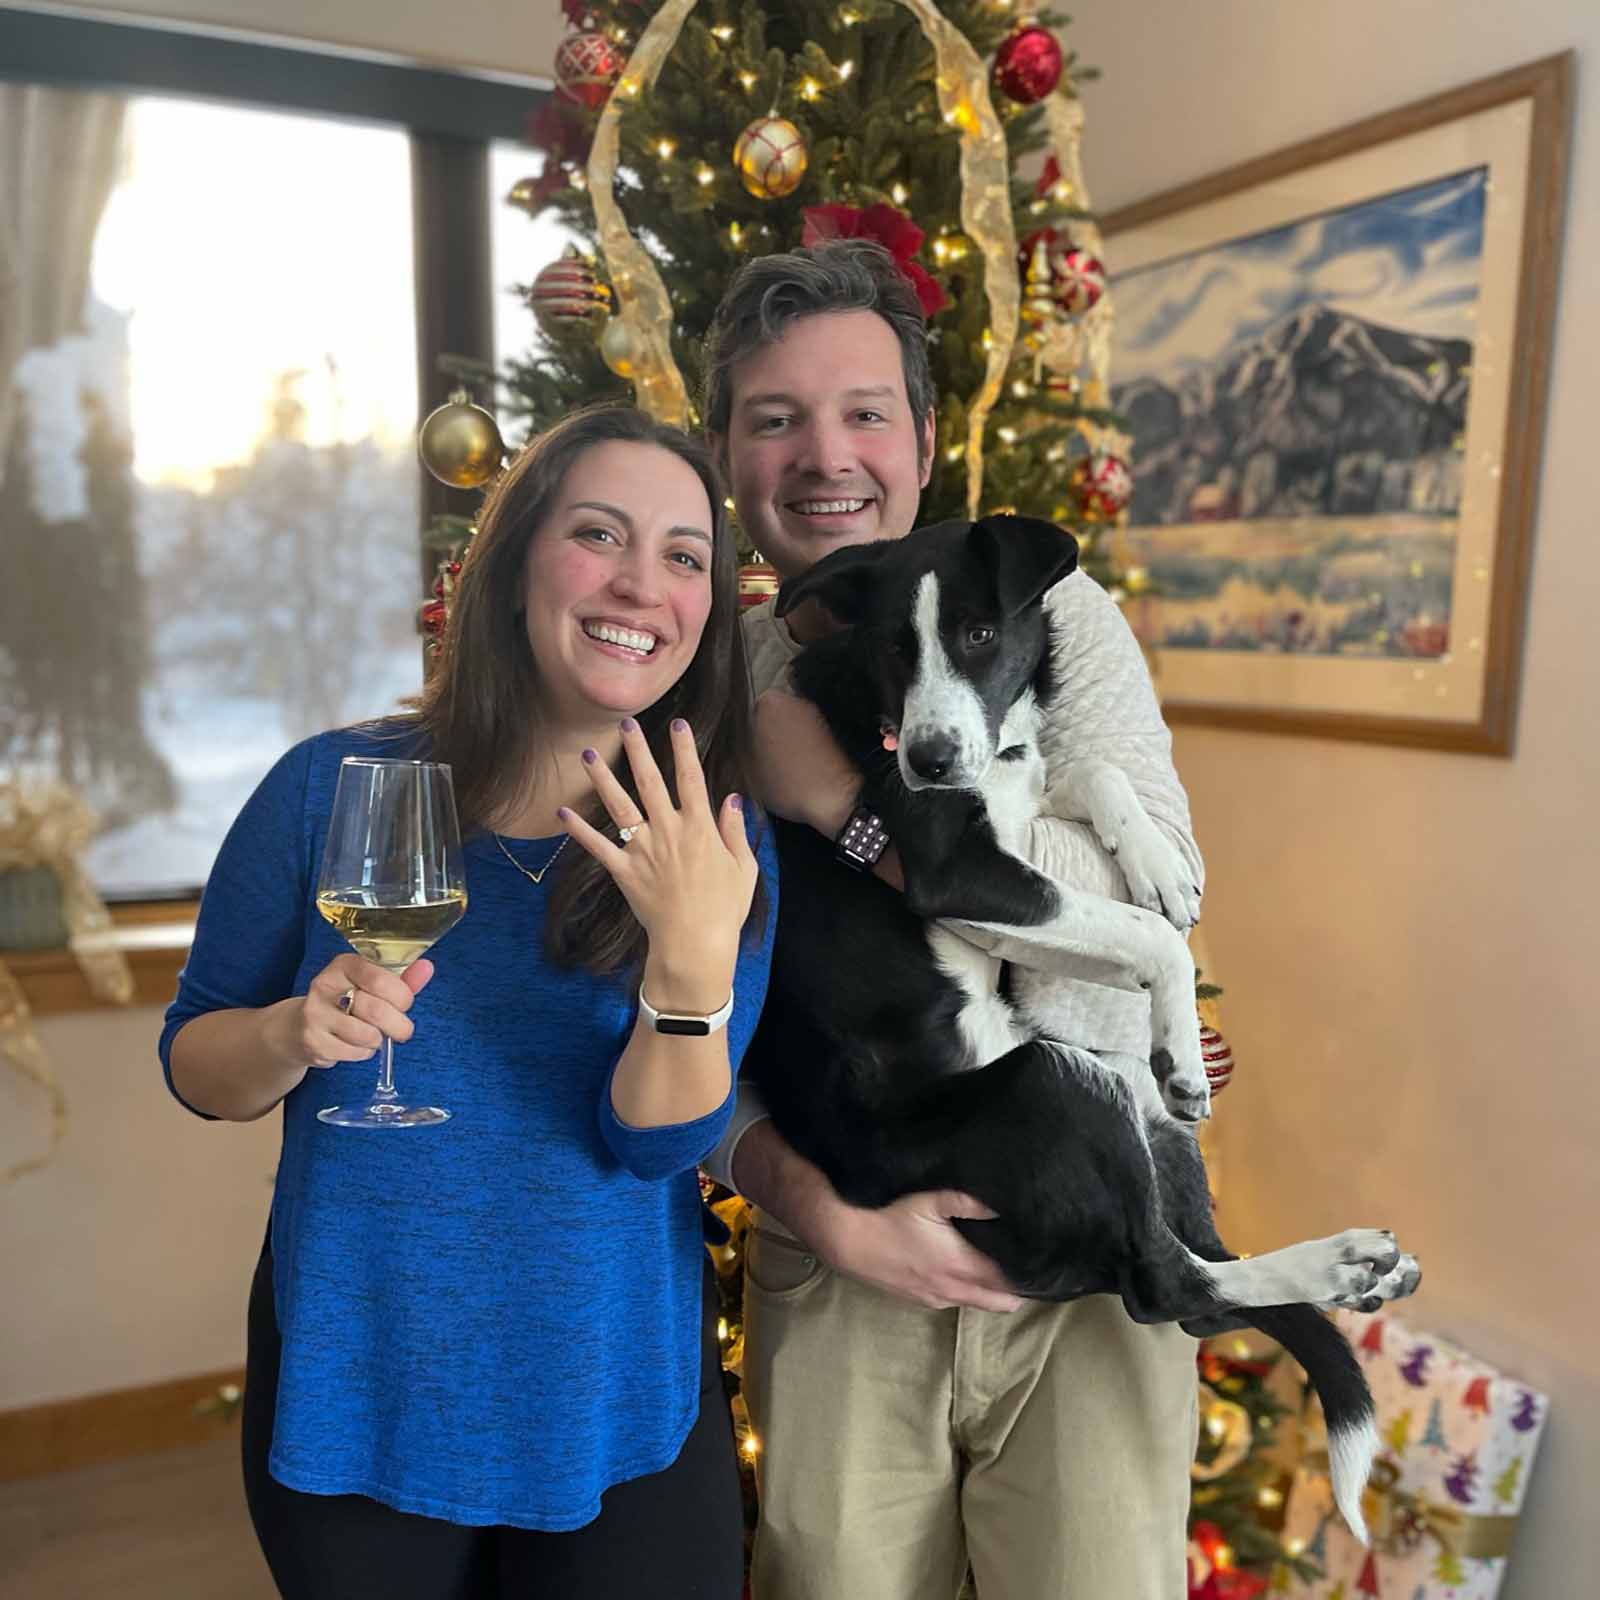 The day we got engaged! With bonus Ellie sighting.